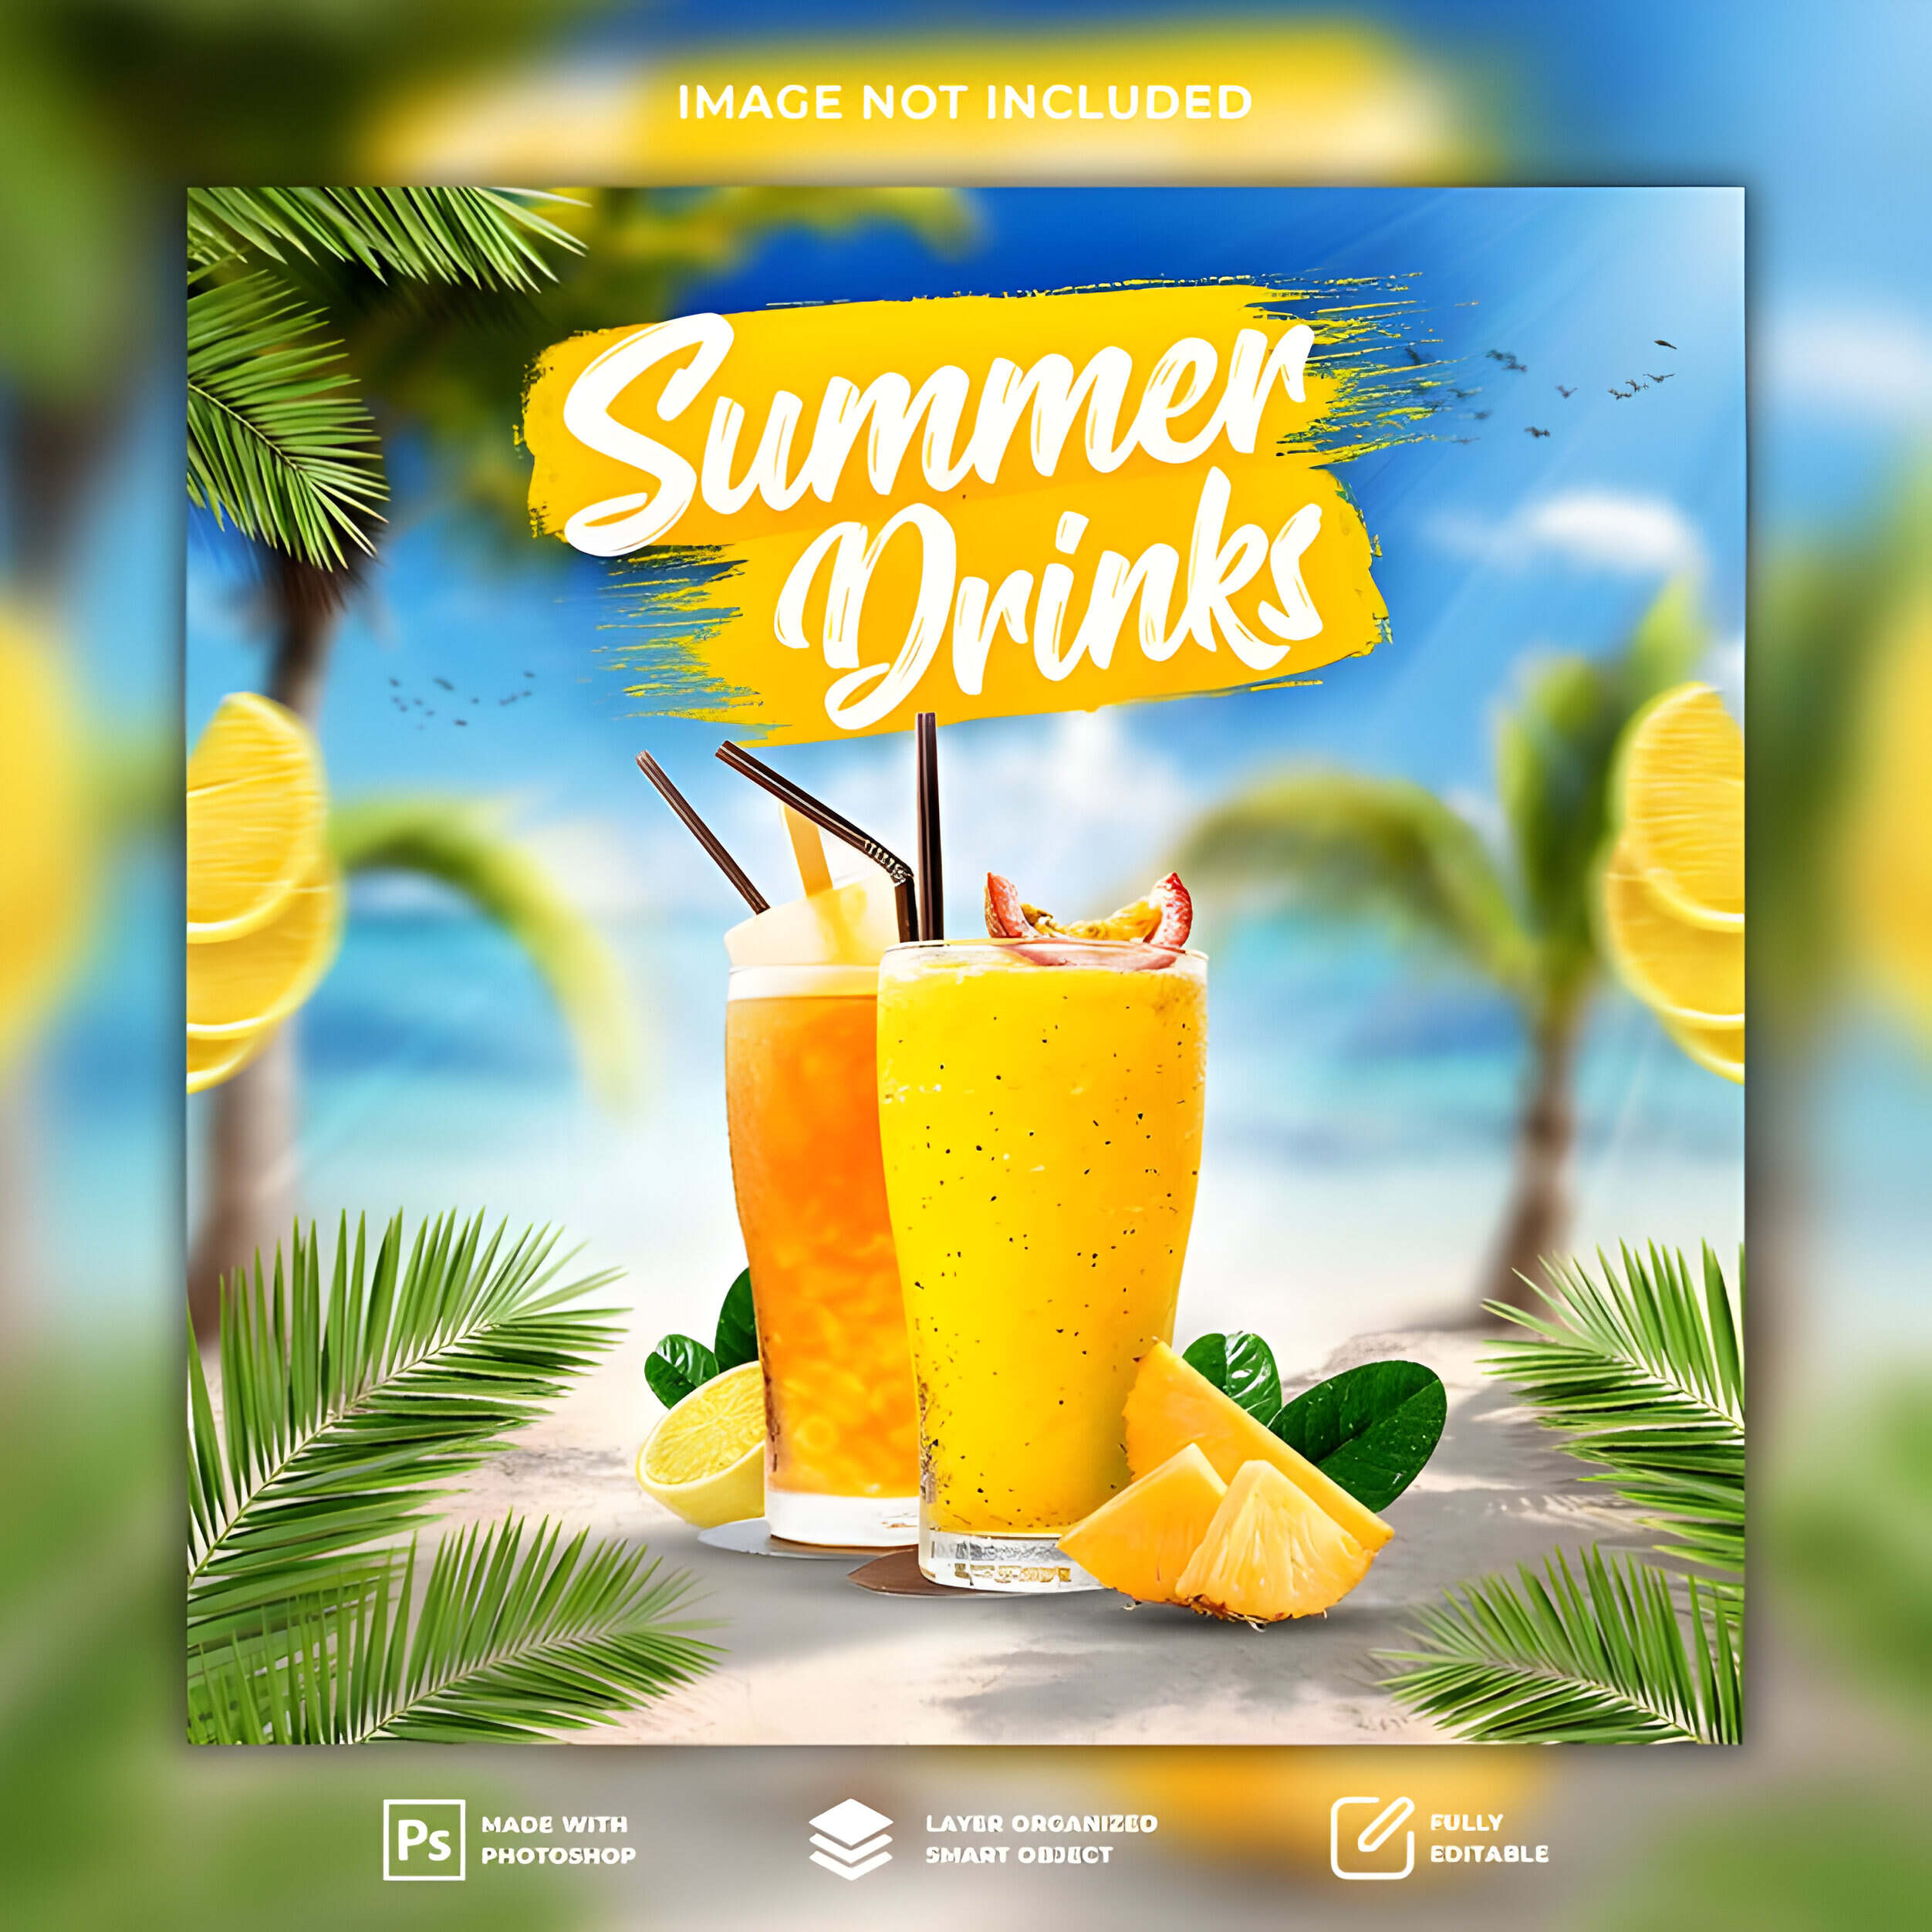 summer drink season post design for social media instagram or facebook 1 1 369